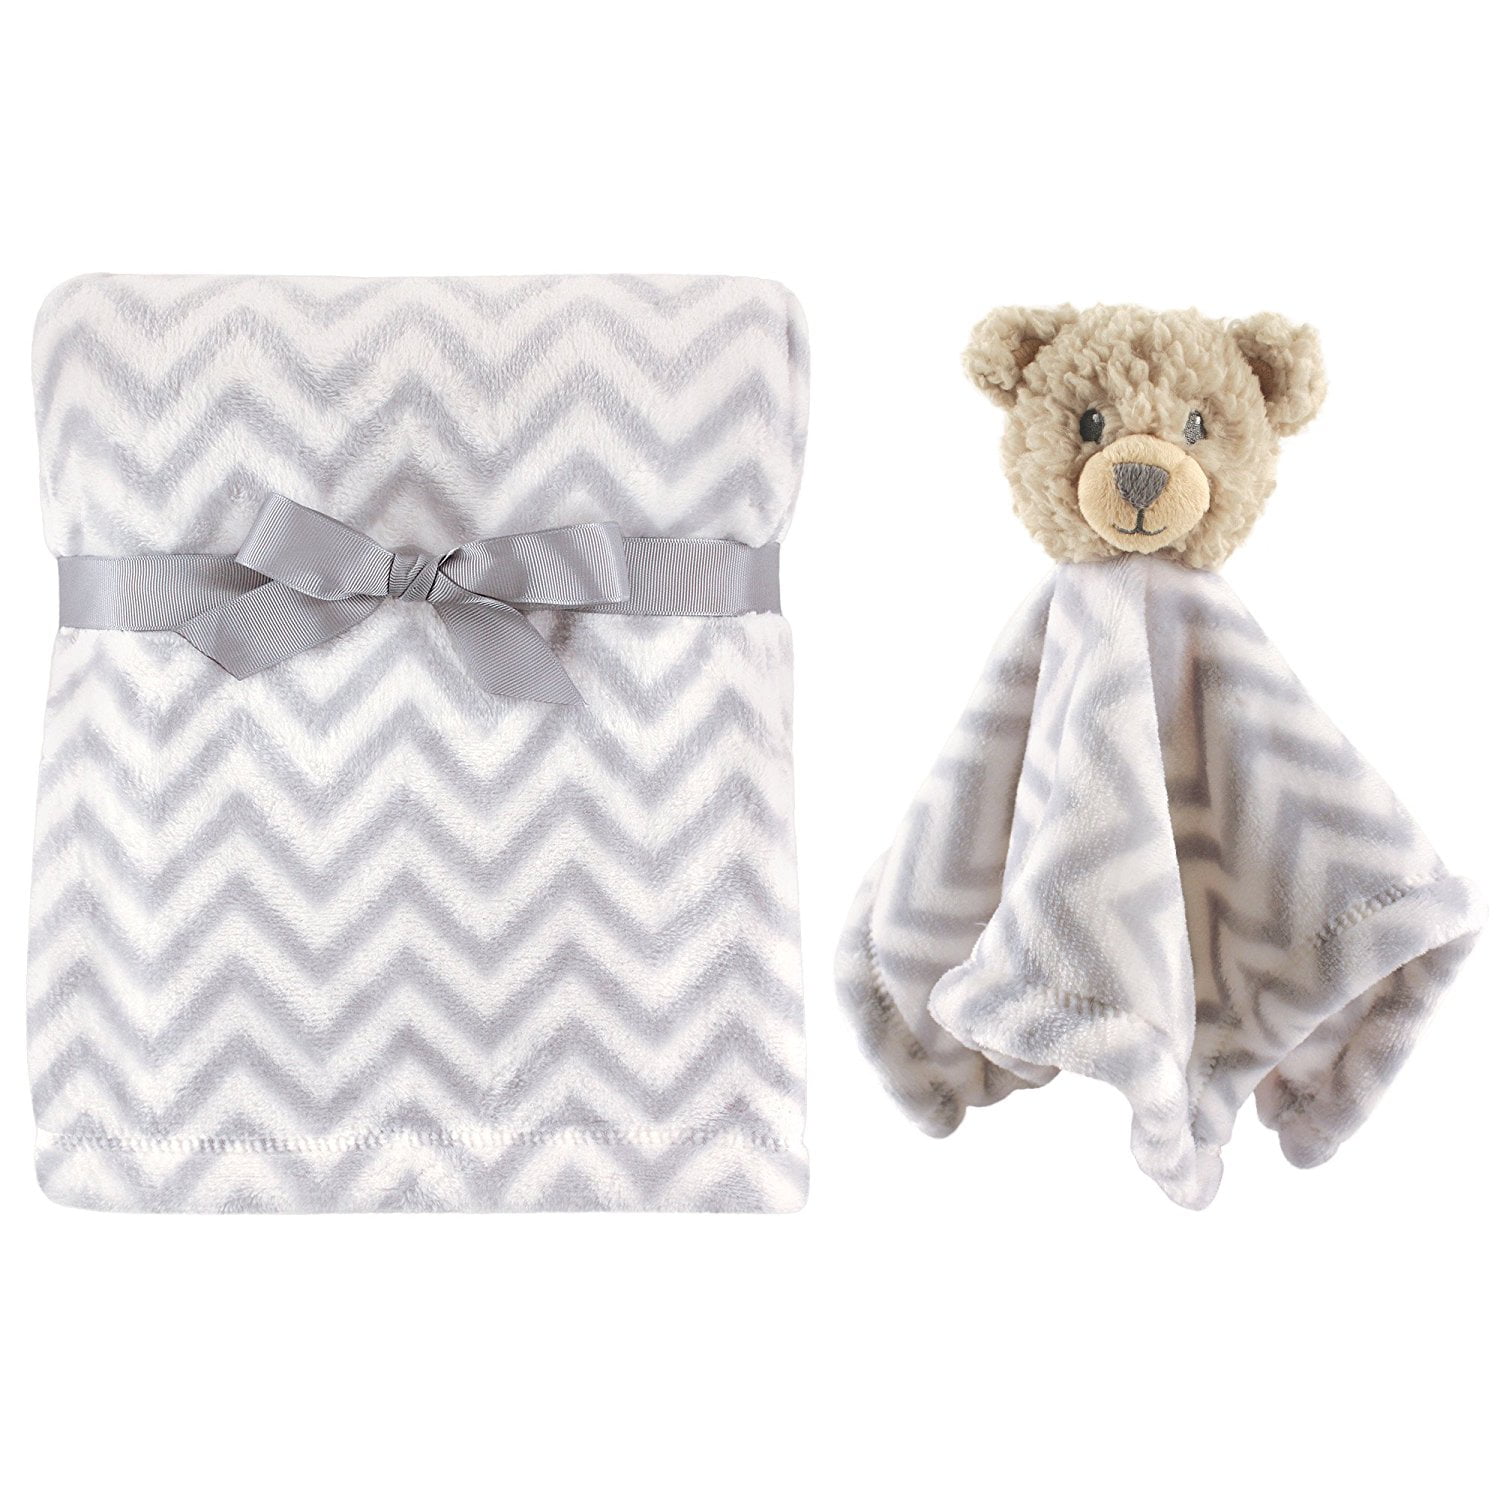 Blankets & Beyond Plush Security Blanket Pink Gray Bear L30 Girls Shower Gift 